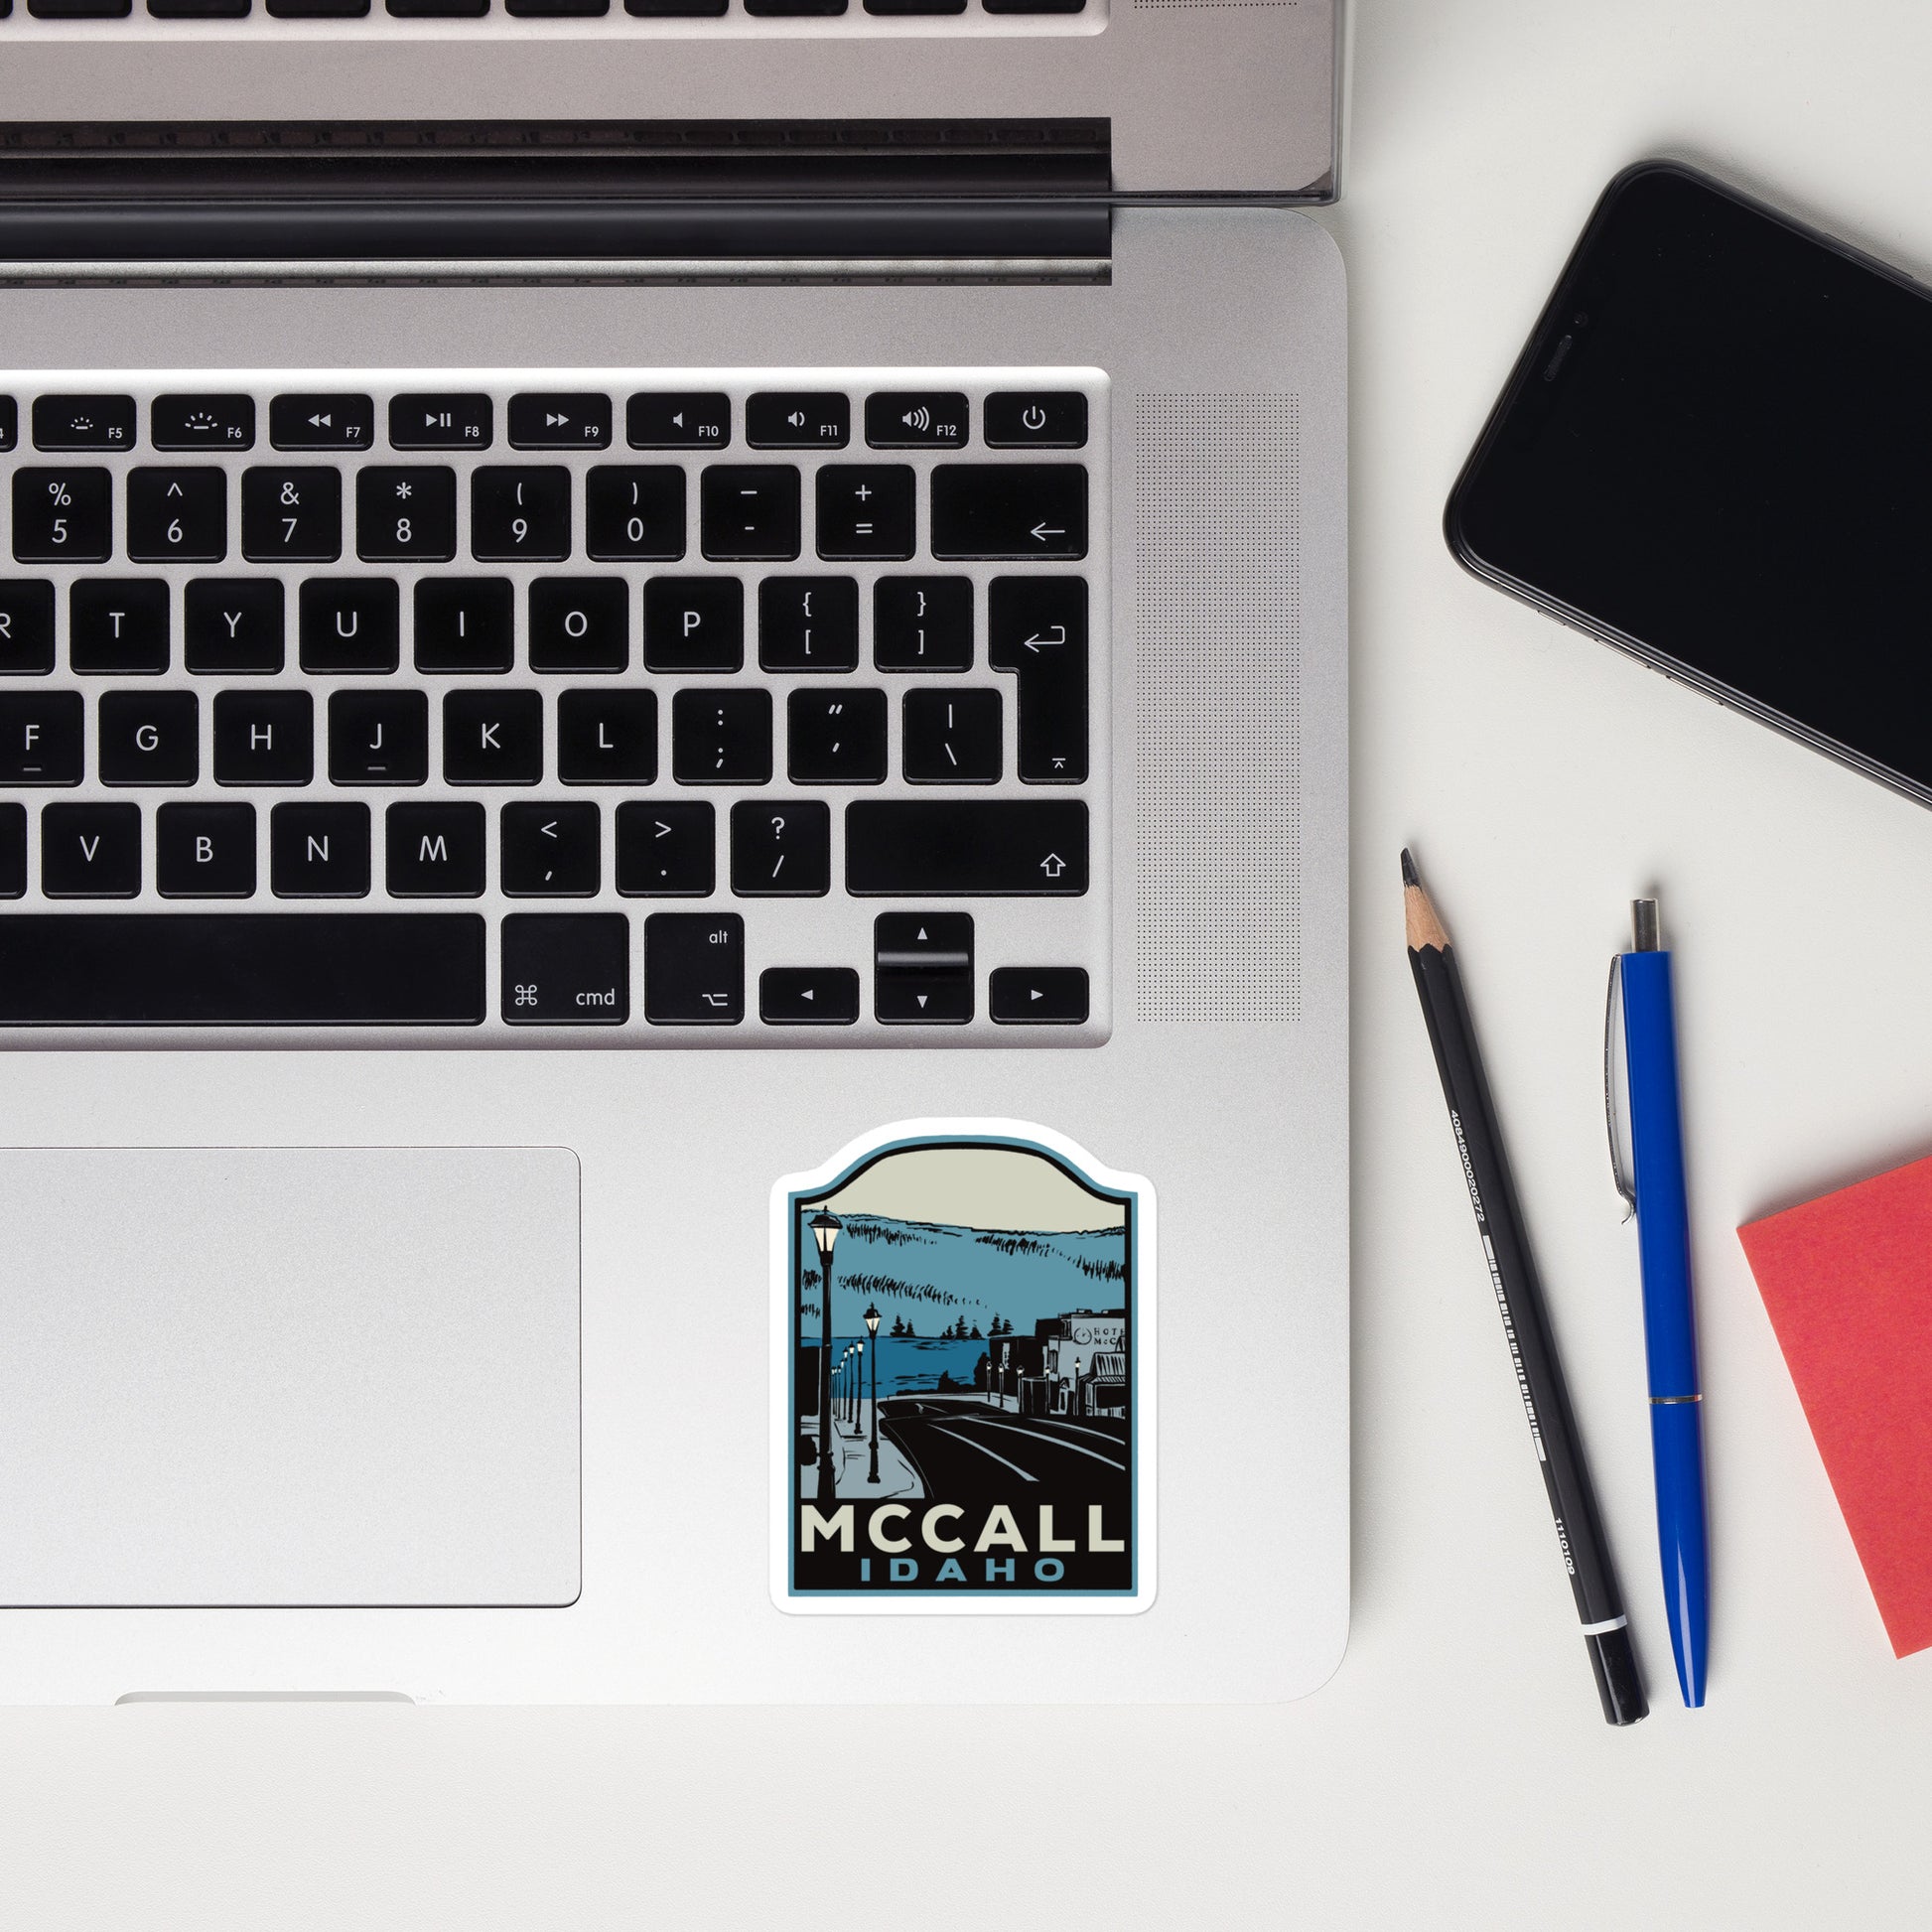 A sticker of McCall Idaho on a laptop